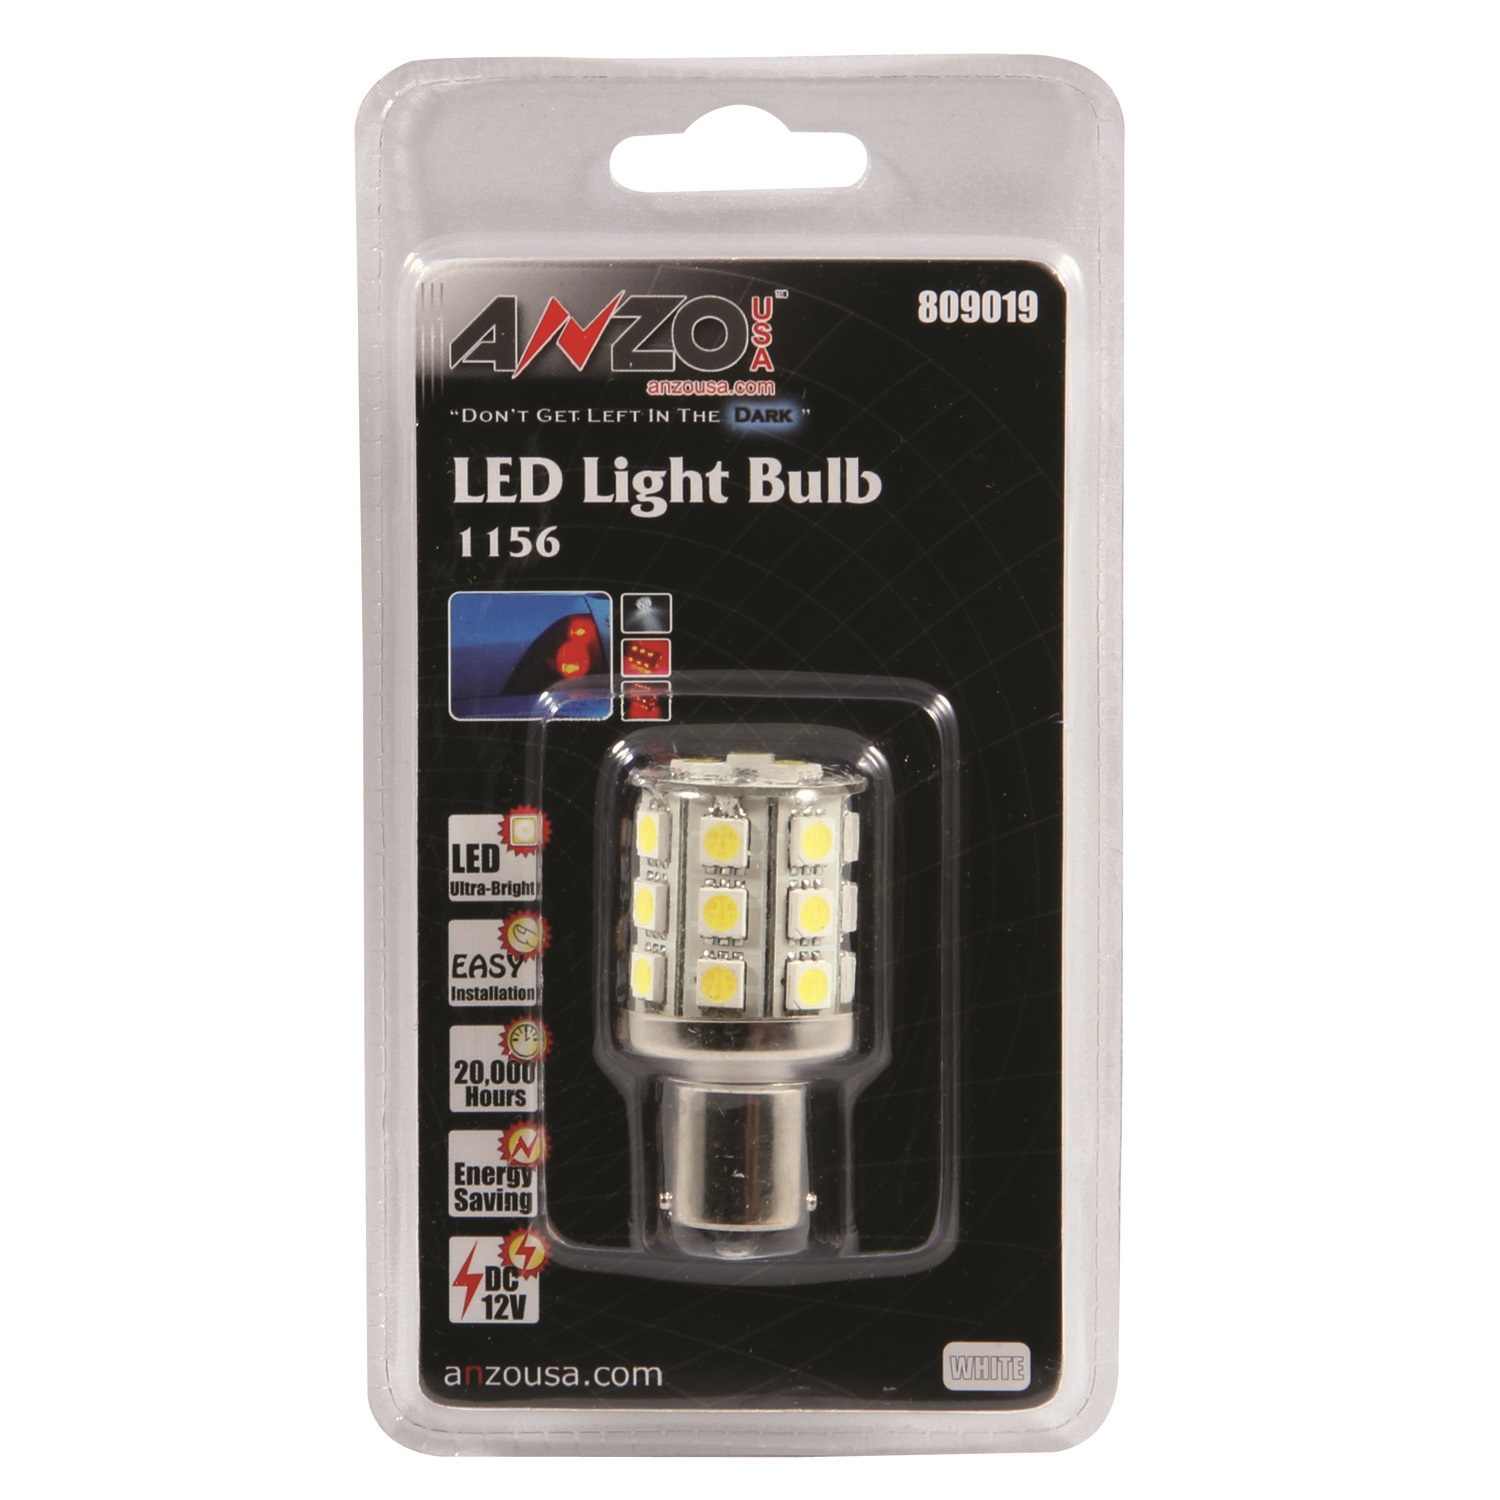 Anzo USA Anzo USA 809019 LED Replacement Bulb